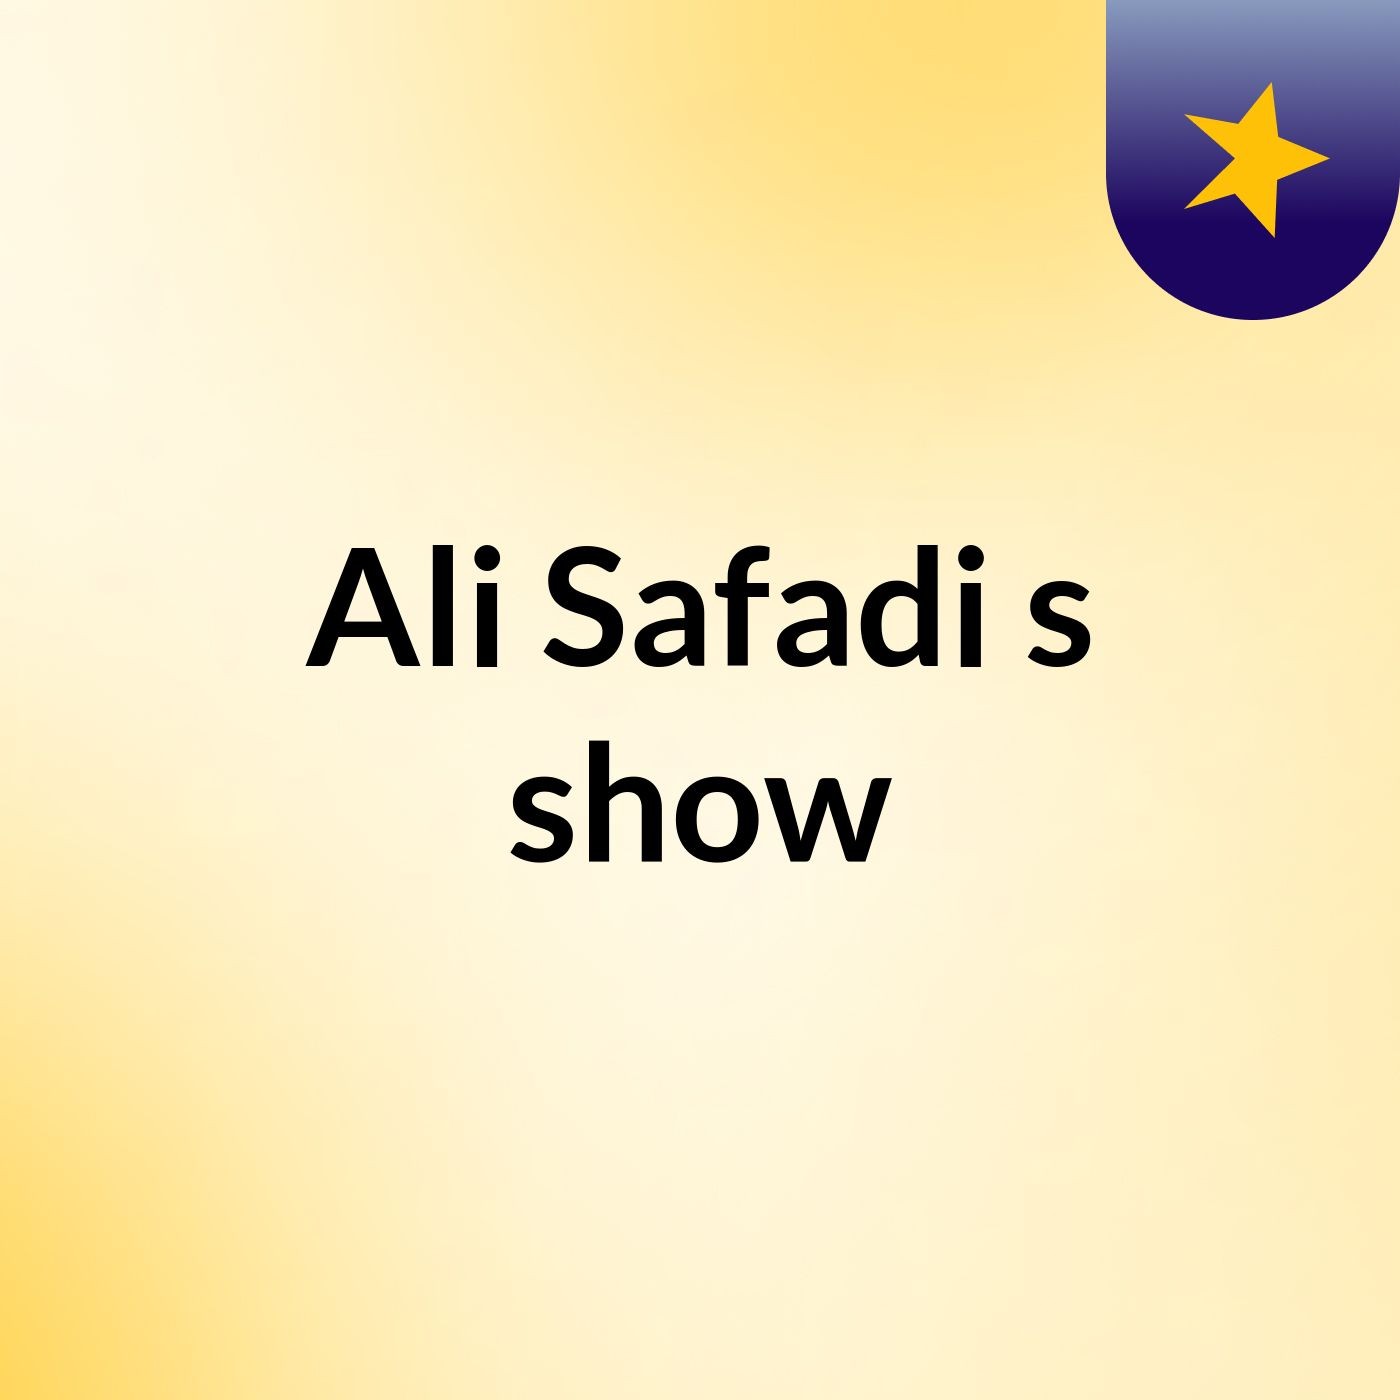 Ali Safadi's show